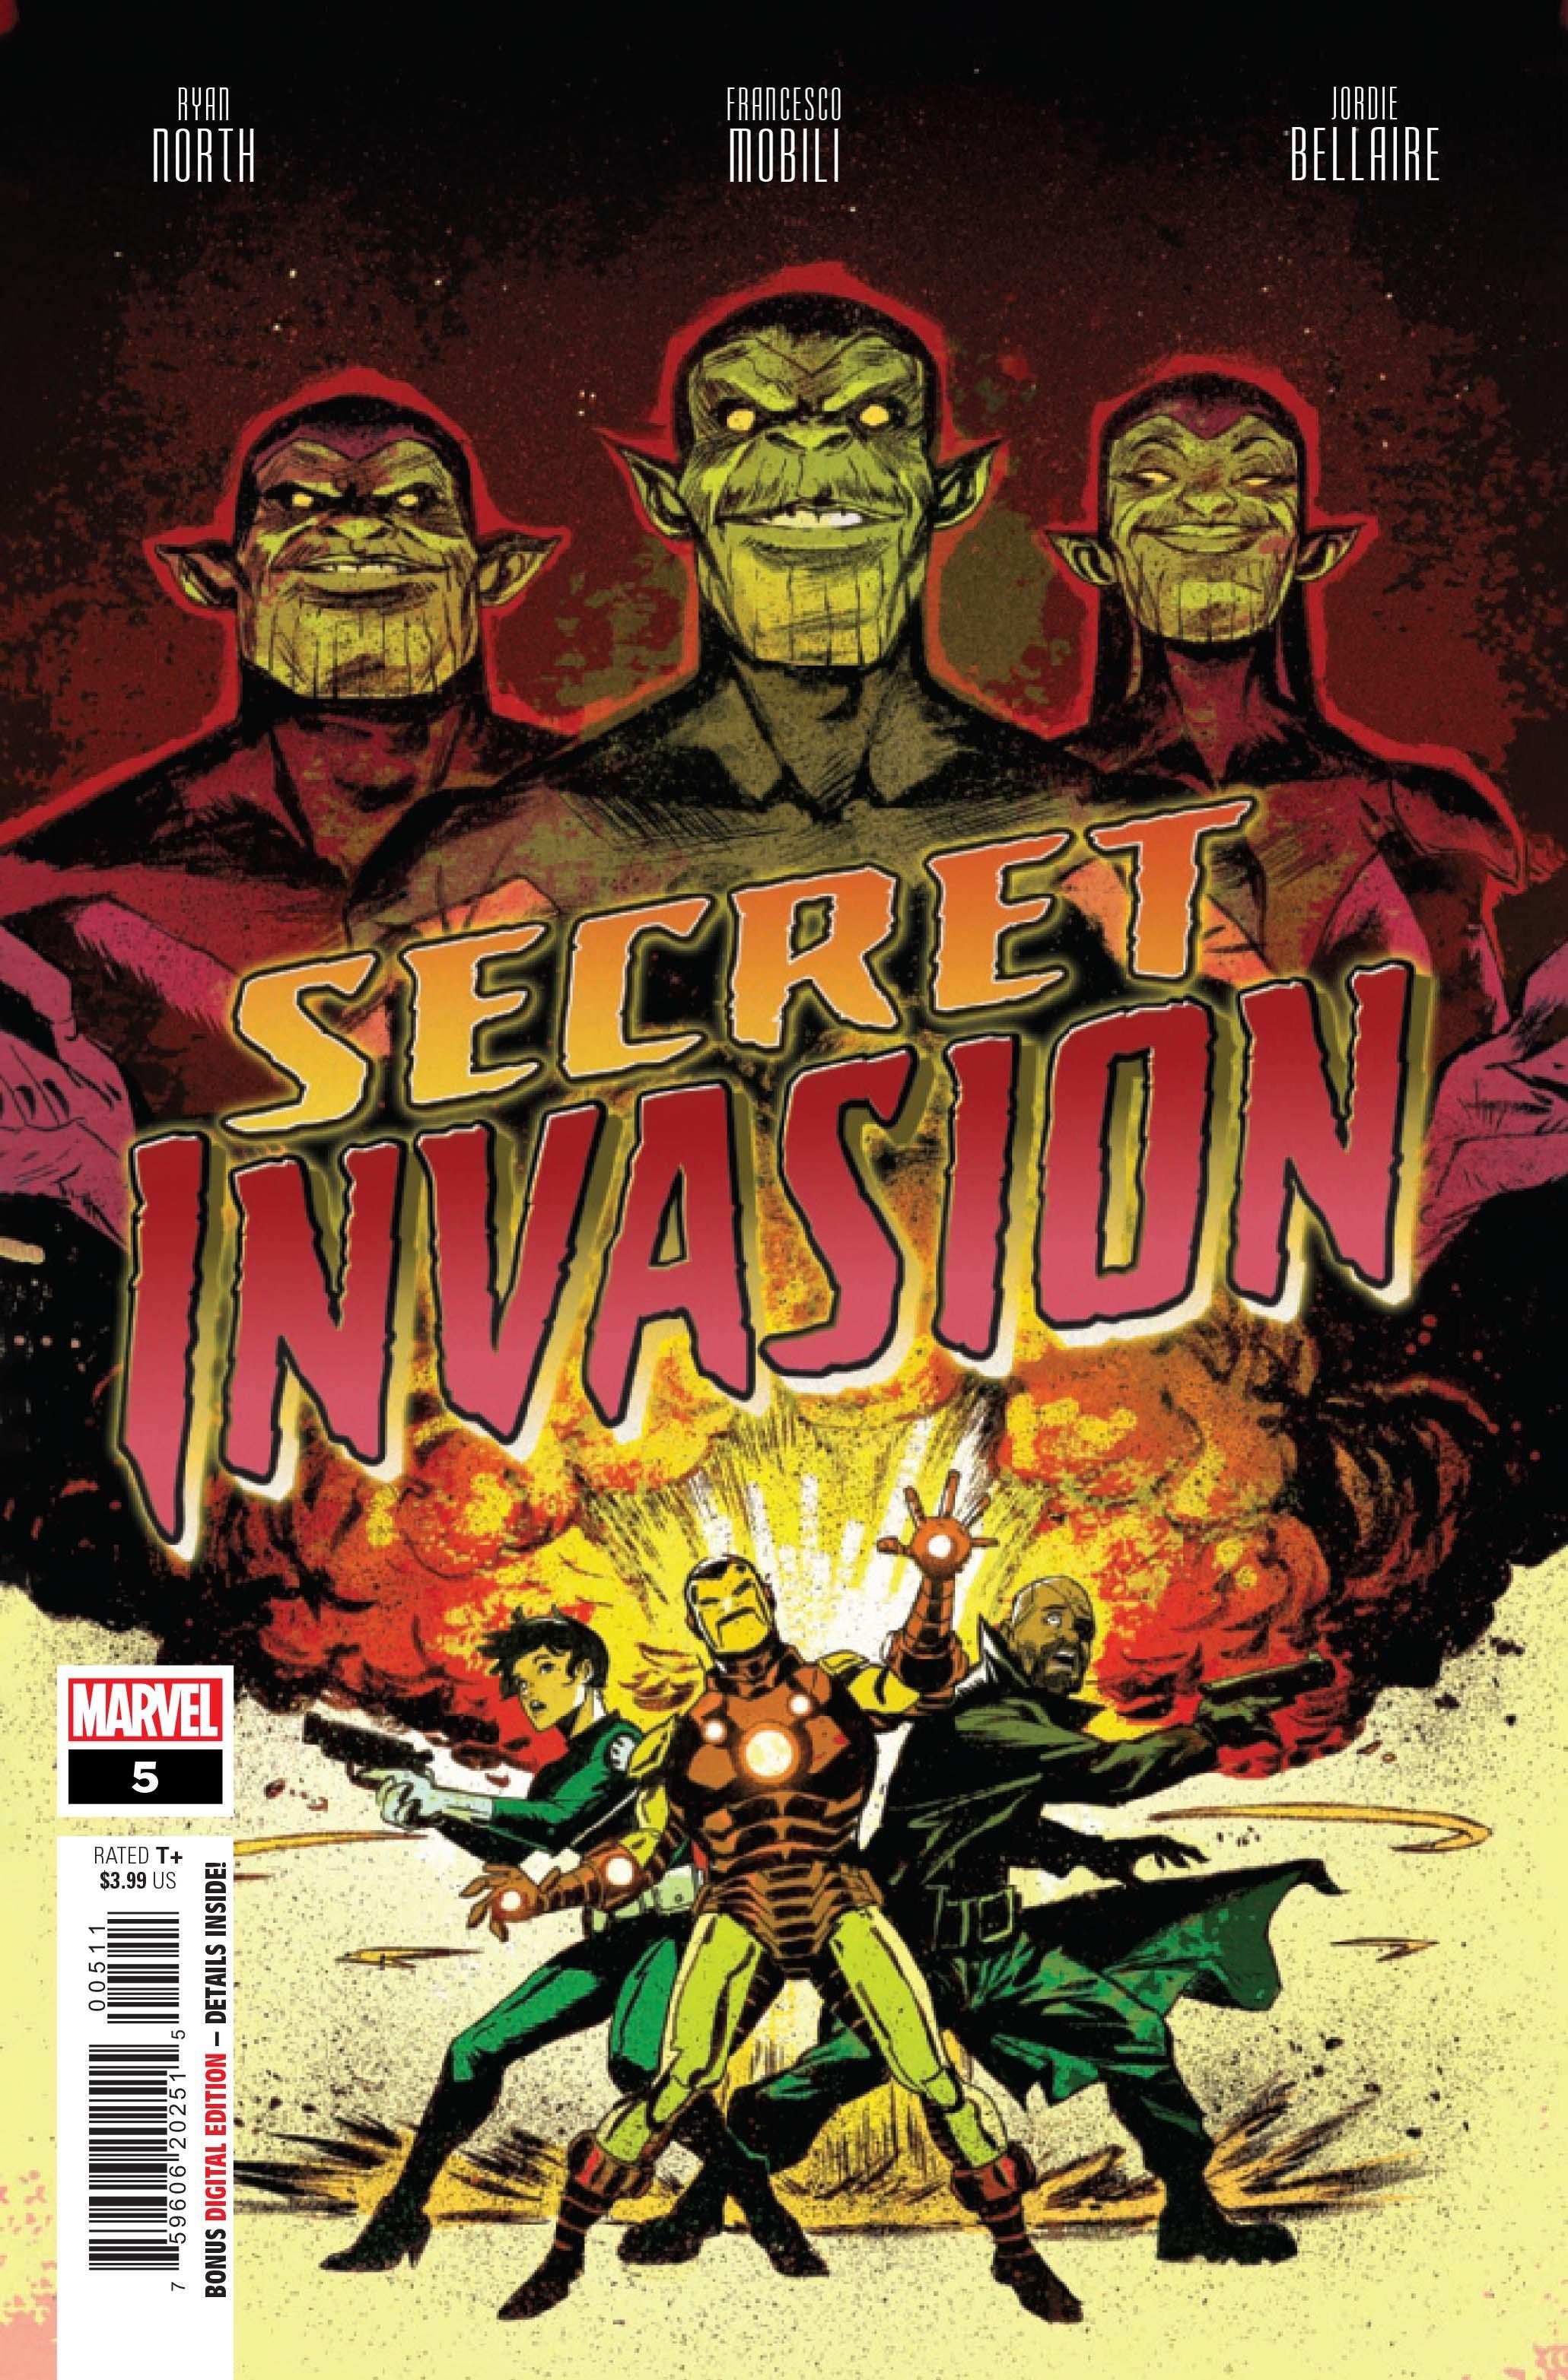 Review: Marvel's 'Secret Invasion' showcases its human hero : NPR